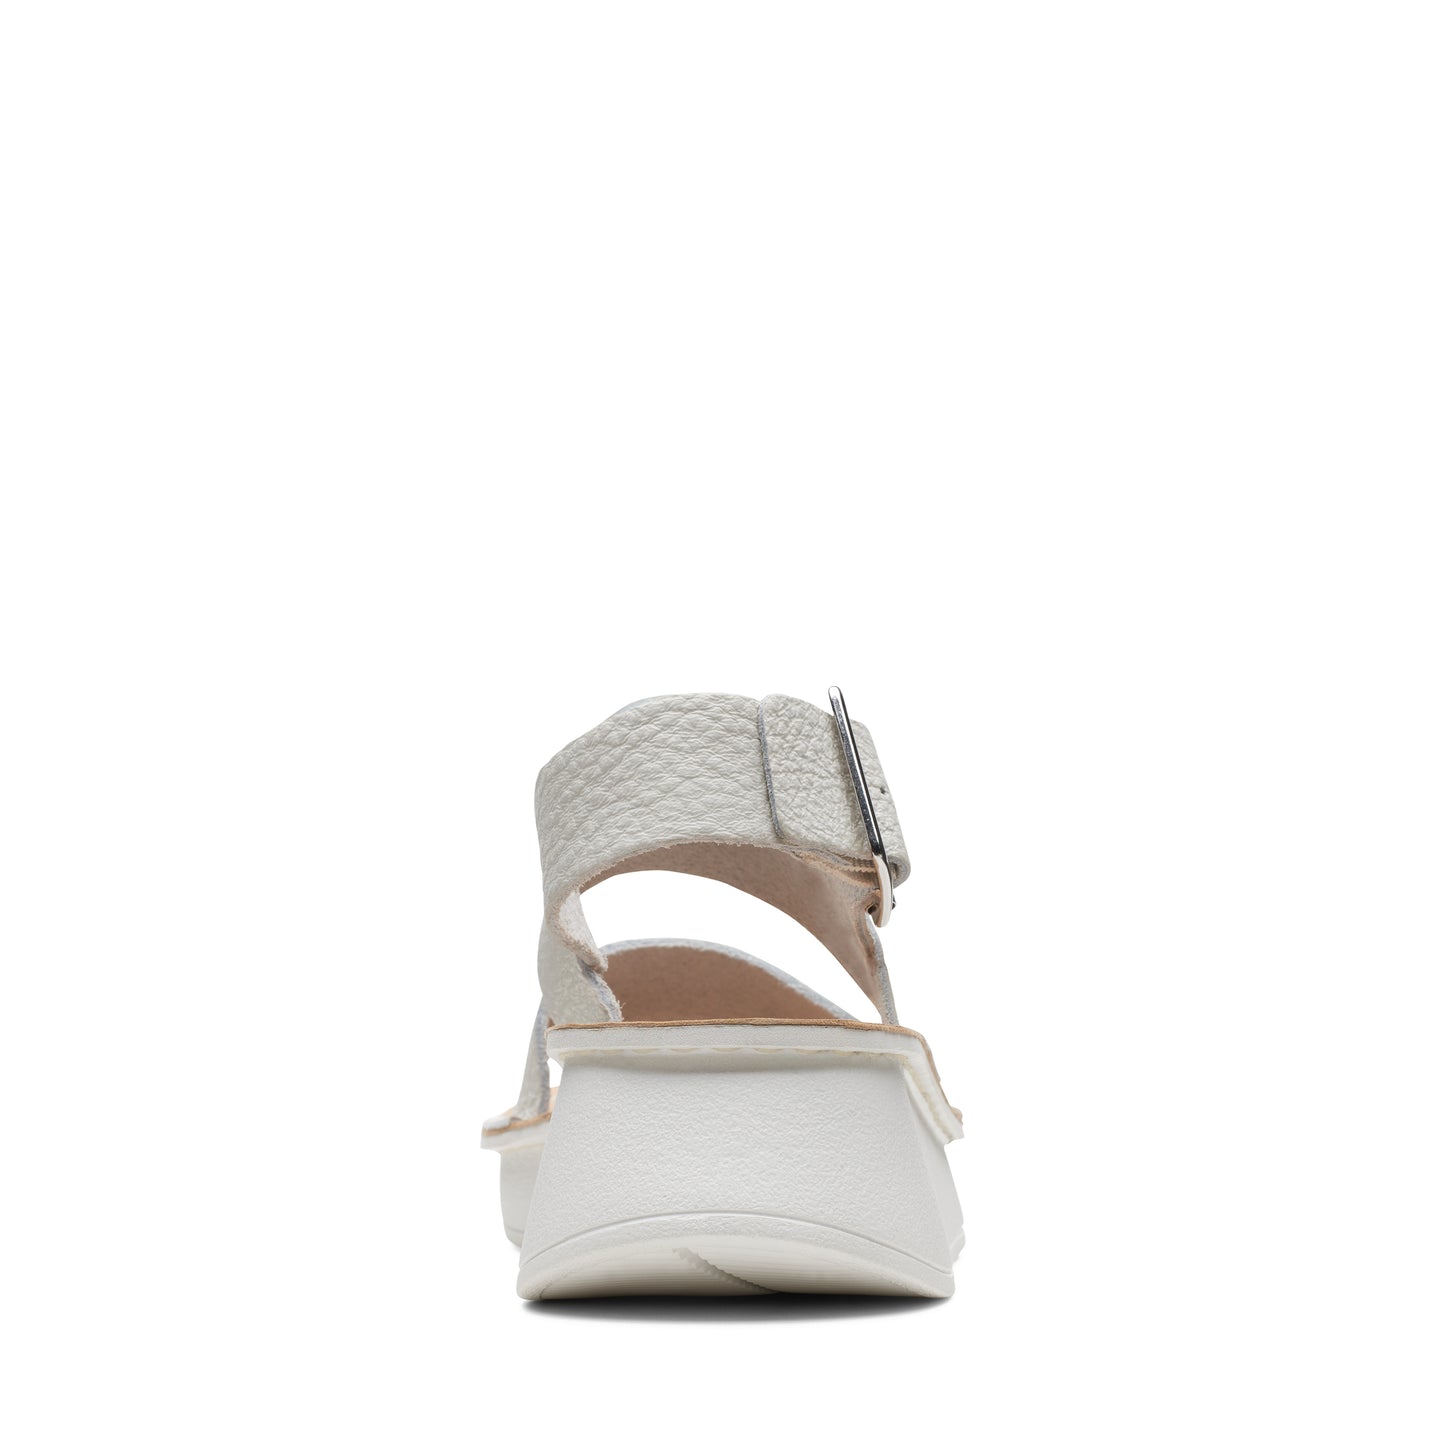 Zapato De Cuña De La Marca Clarks Para Mujer Modelo Velhill Strap Off White LeaEn Color Blanco